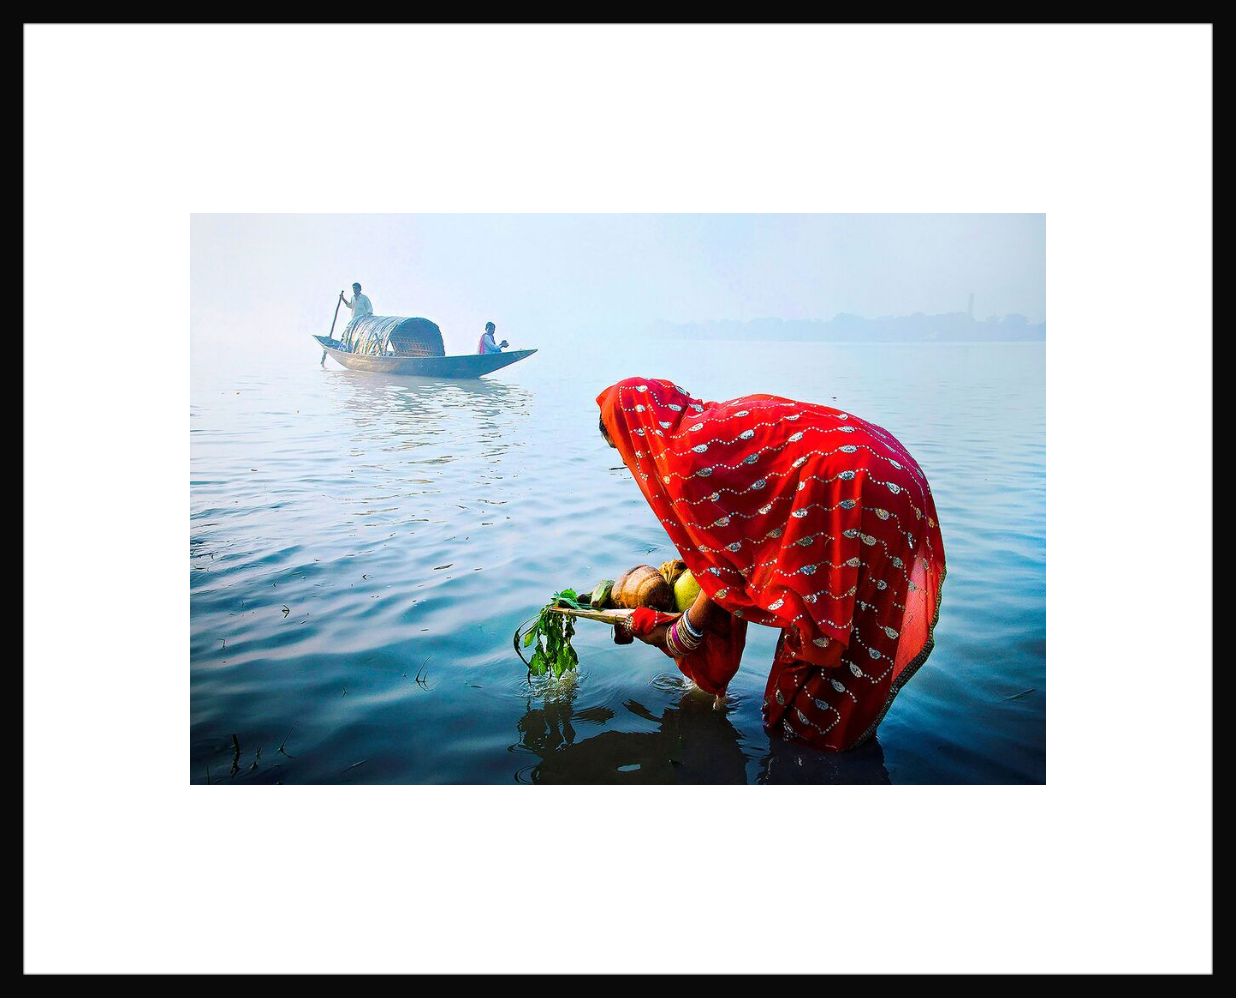 Photograph Morning prayer - Pranab Basak - Picture painting